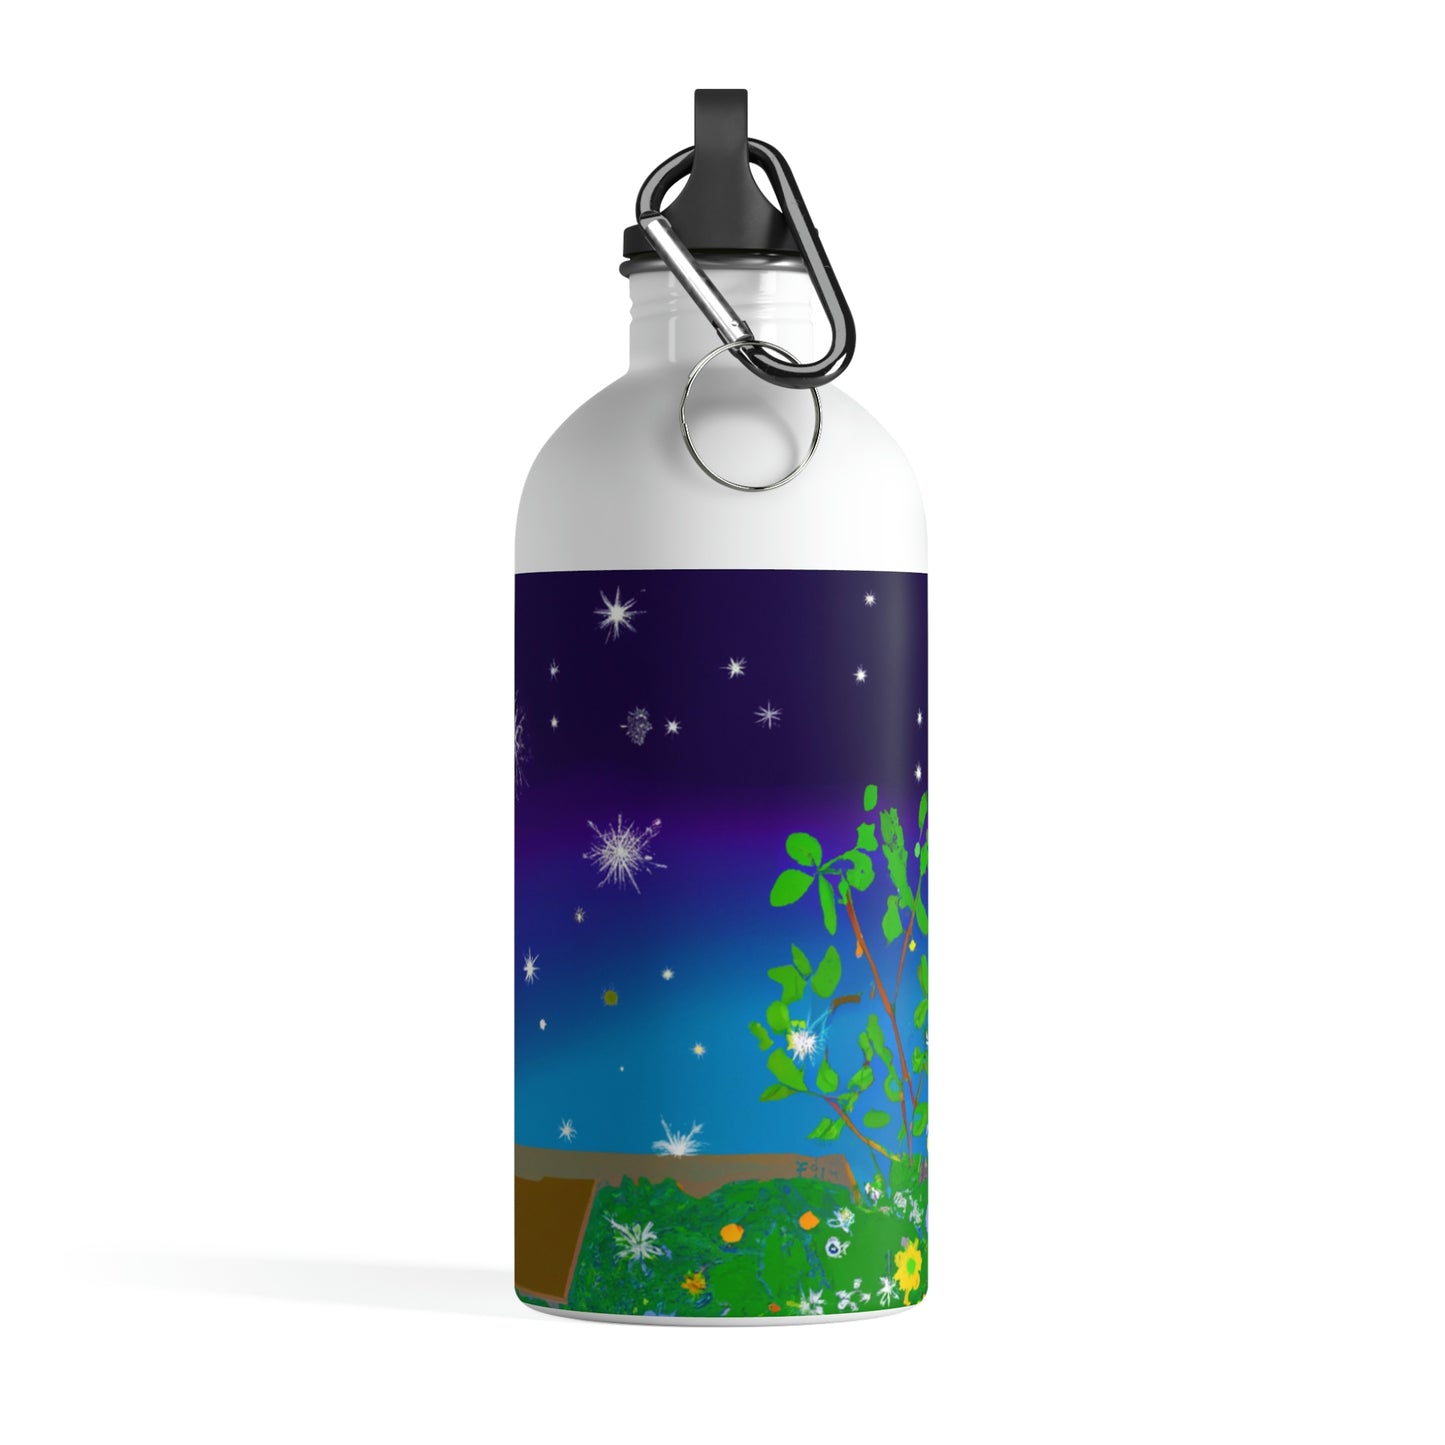 "A Celestial Garden of Color" - The Alien Stainless Steel Water Bottle